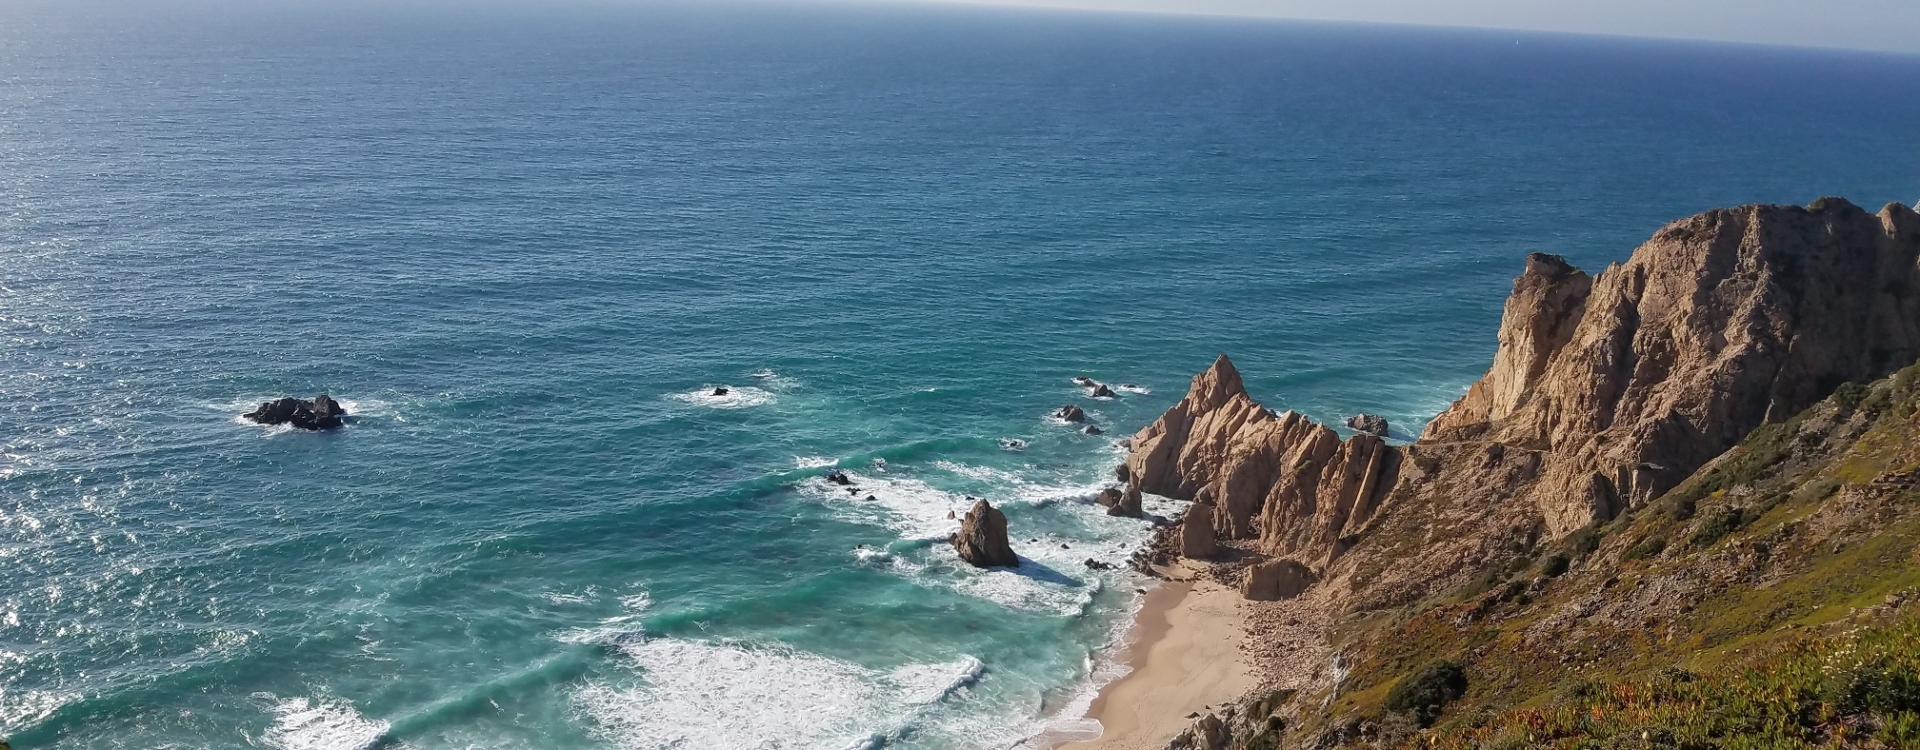 Background Image of Cabo de Roca Portugal